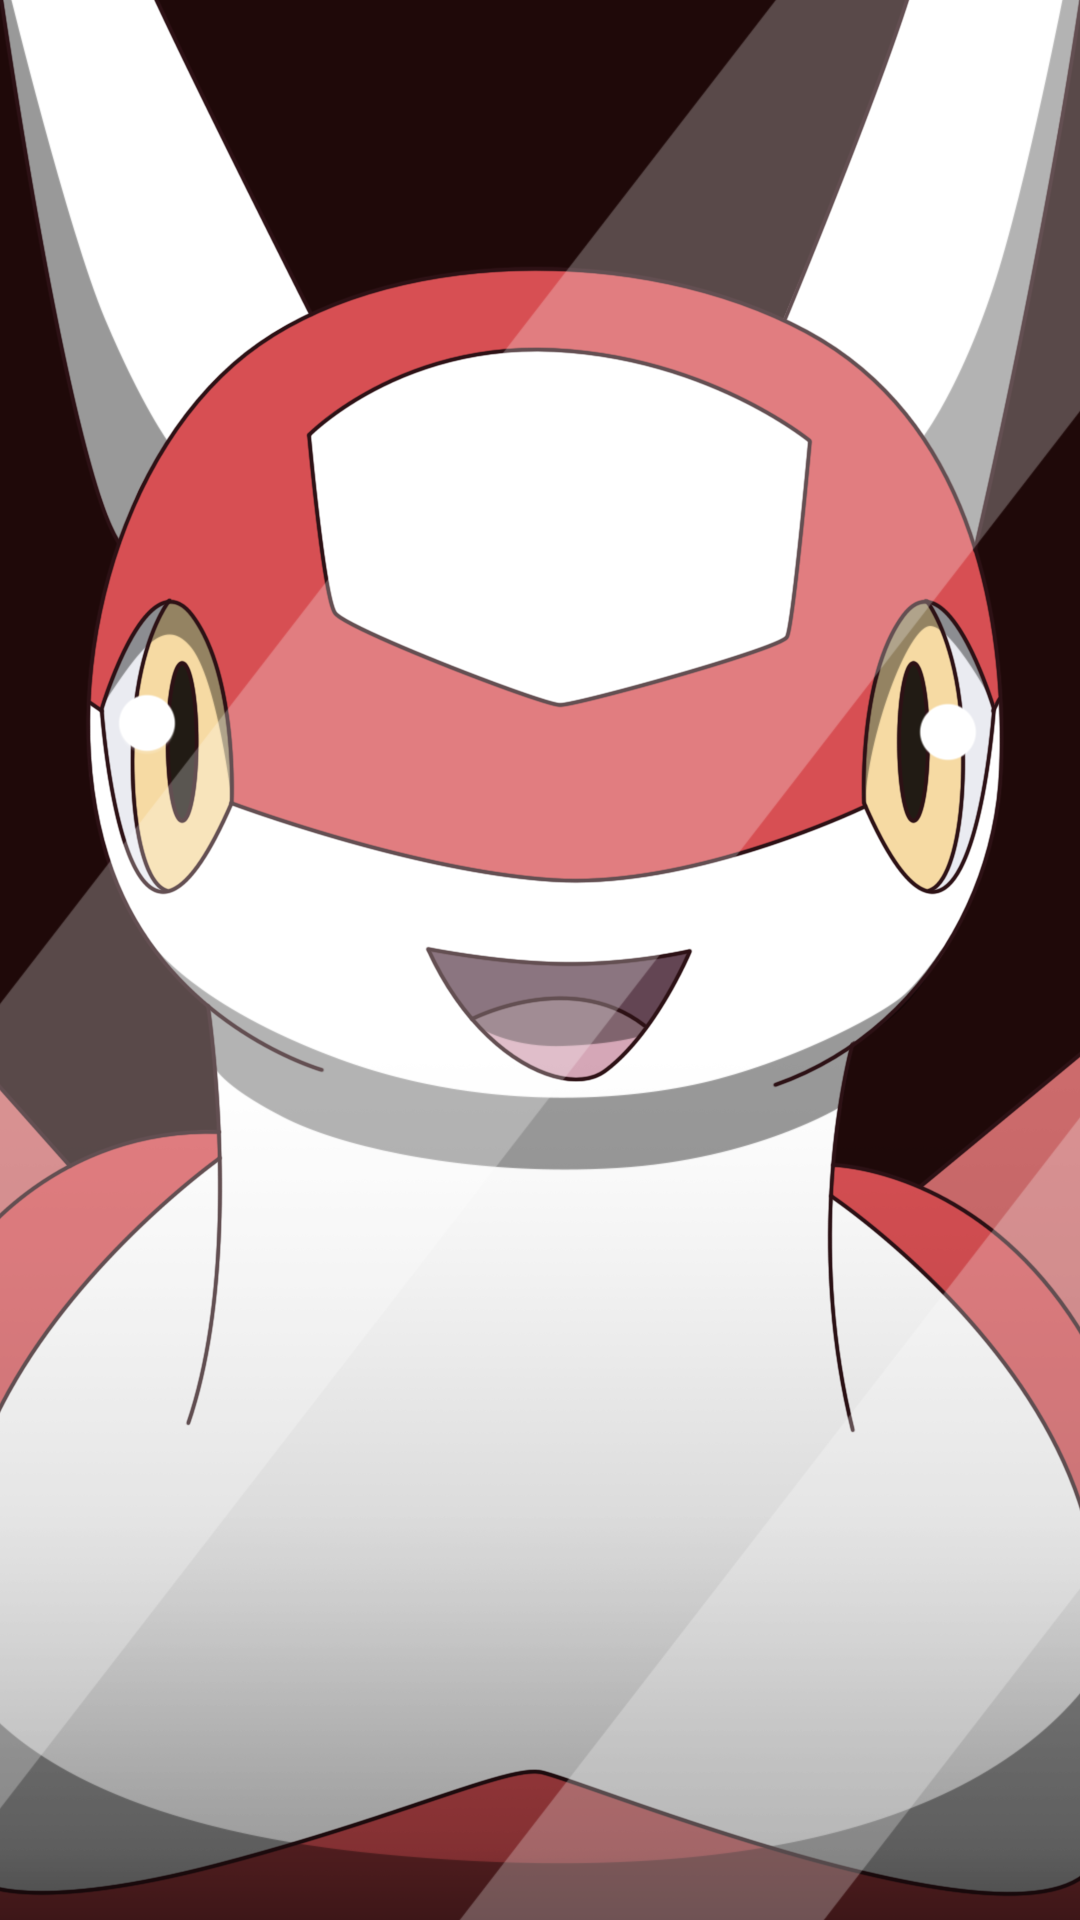 Pokemon MW: Shiny Lucario by All0412 on DeviantArt